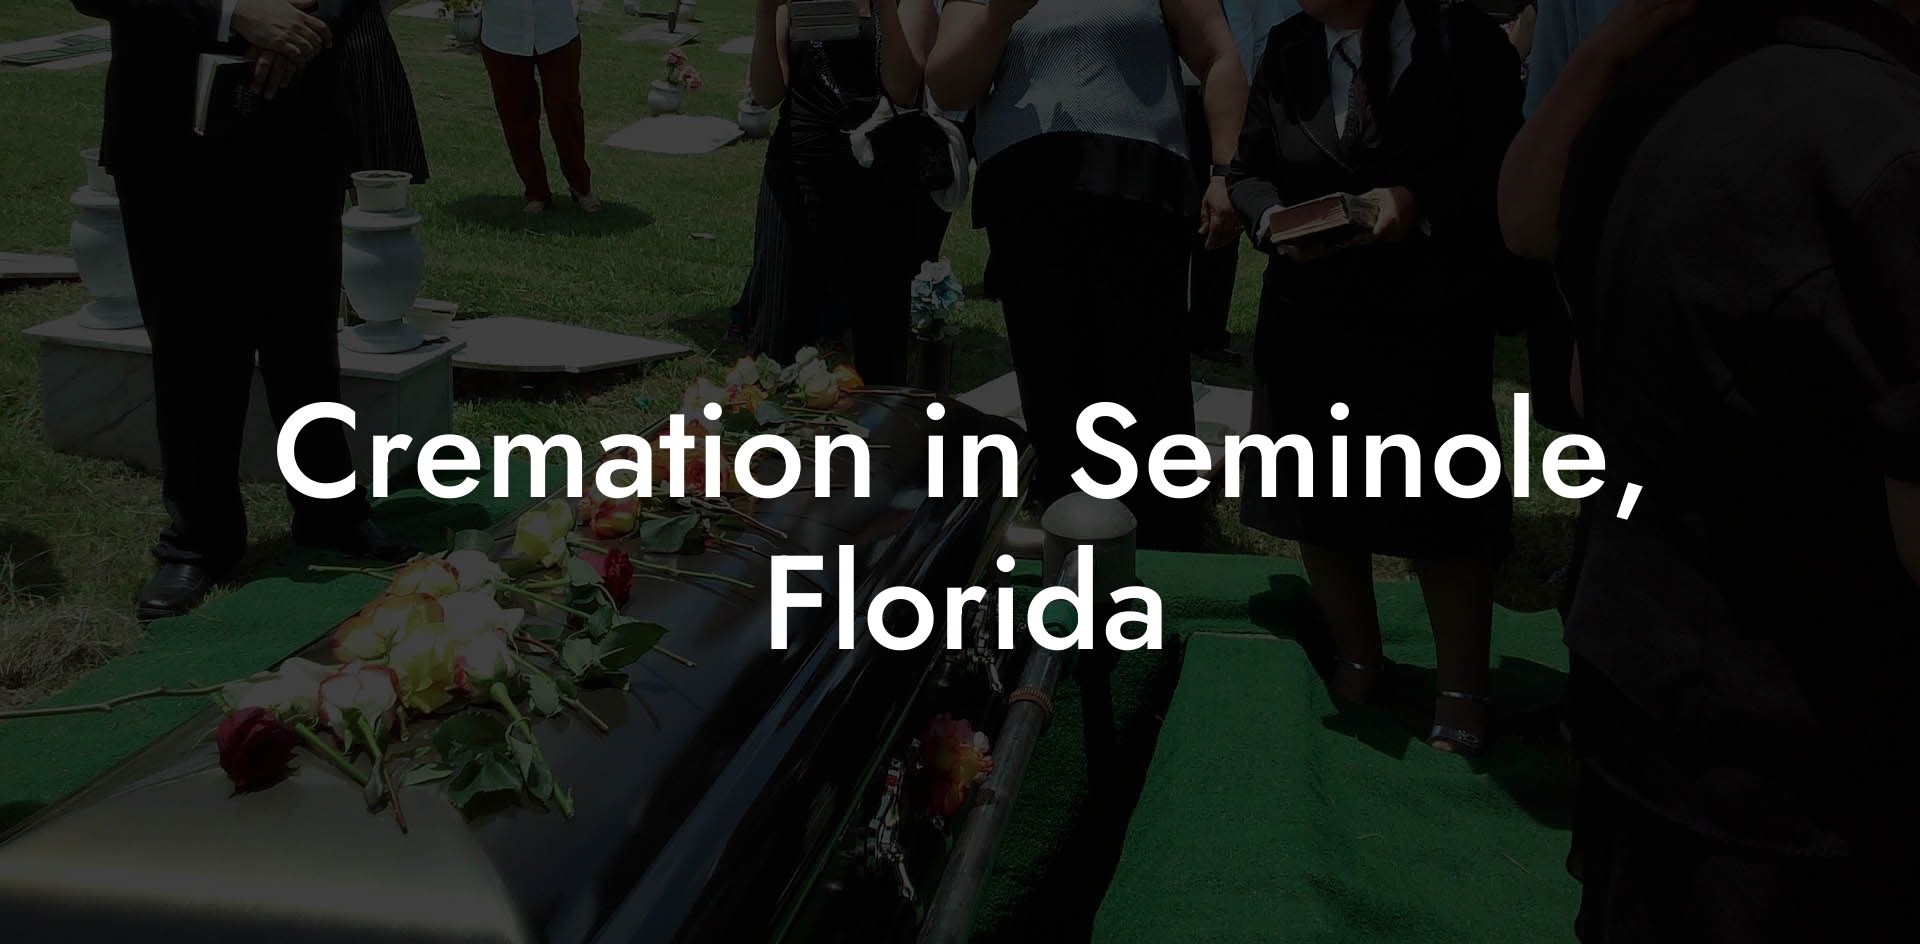 Cremation in Seminole, Florida